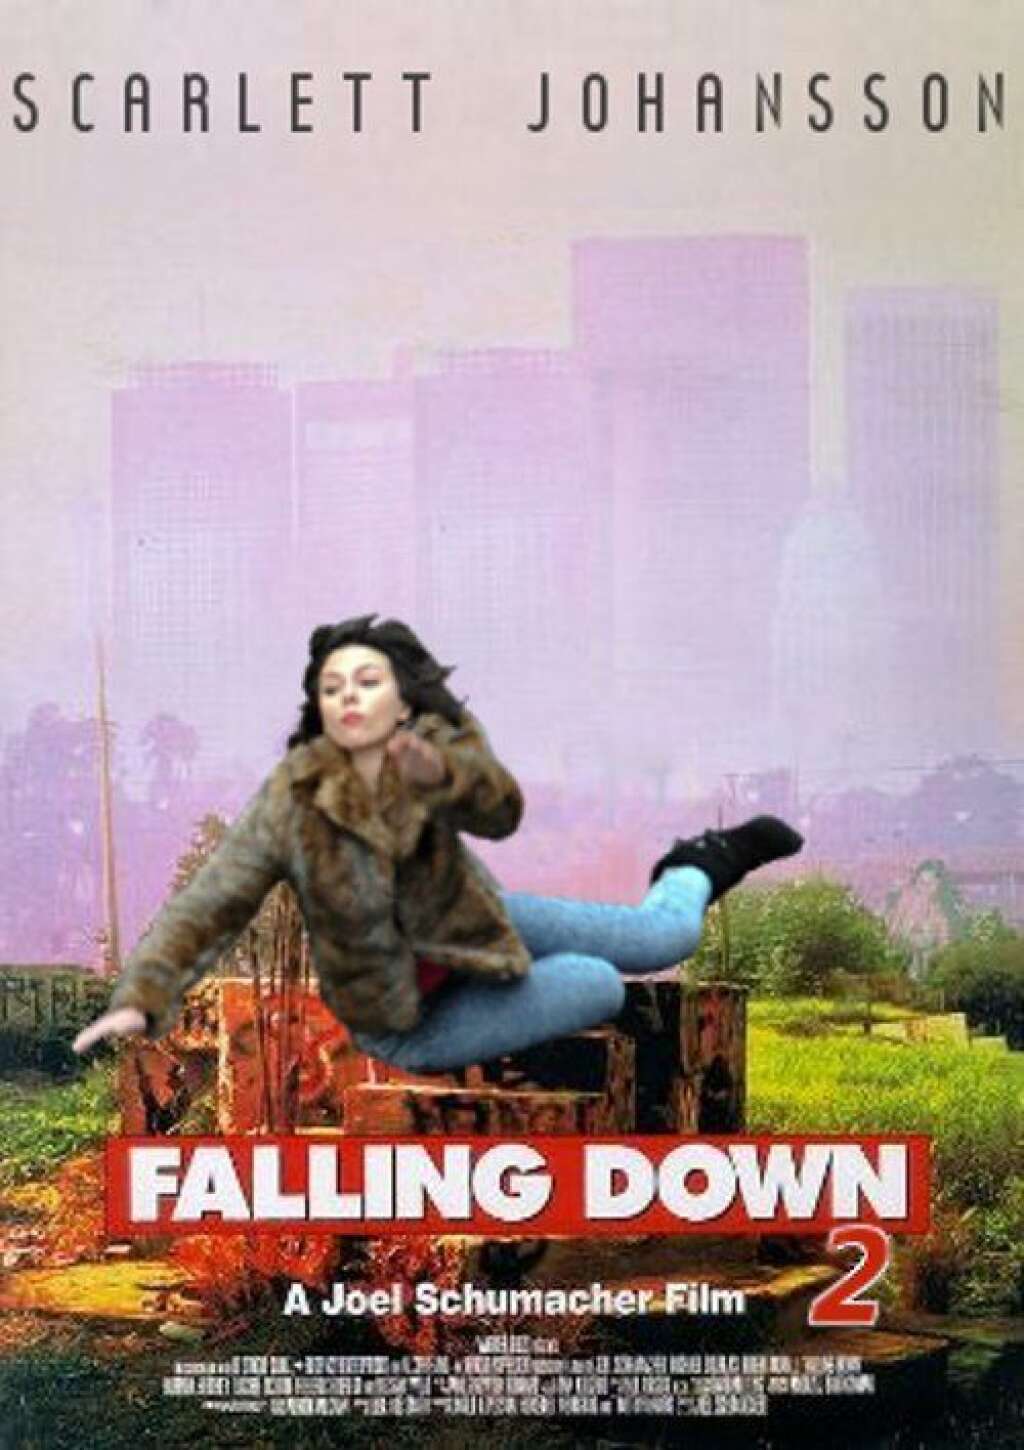 - Une référence au film <a href="http://www.imdb.com/title/tt0106856/" target="_blank">Falling Down</a>.